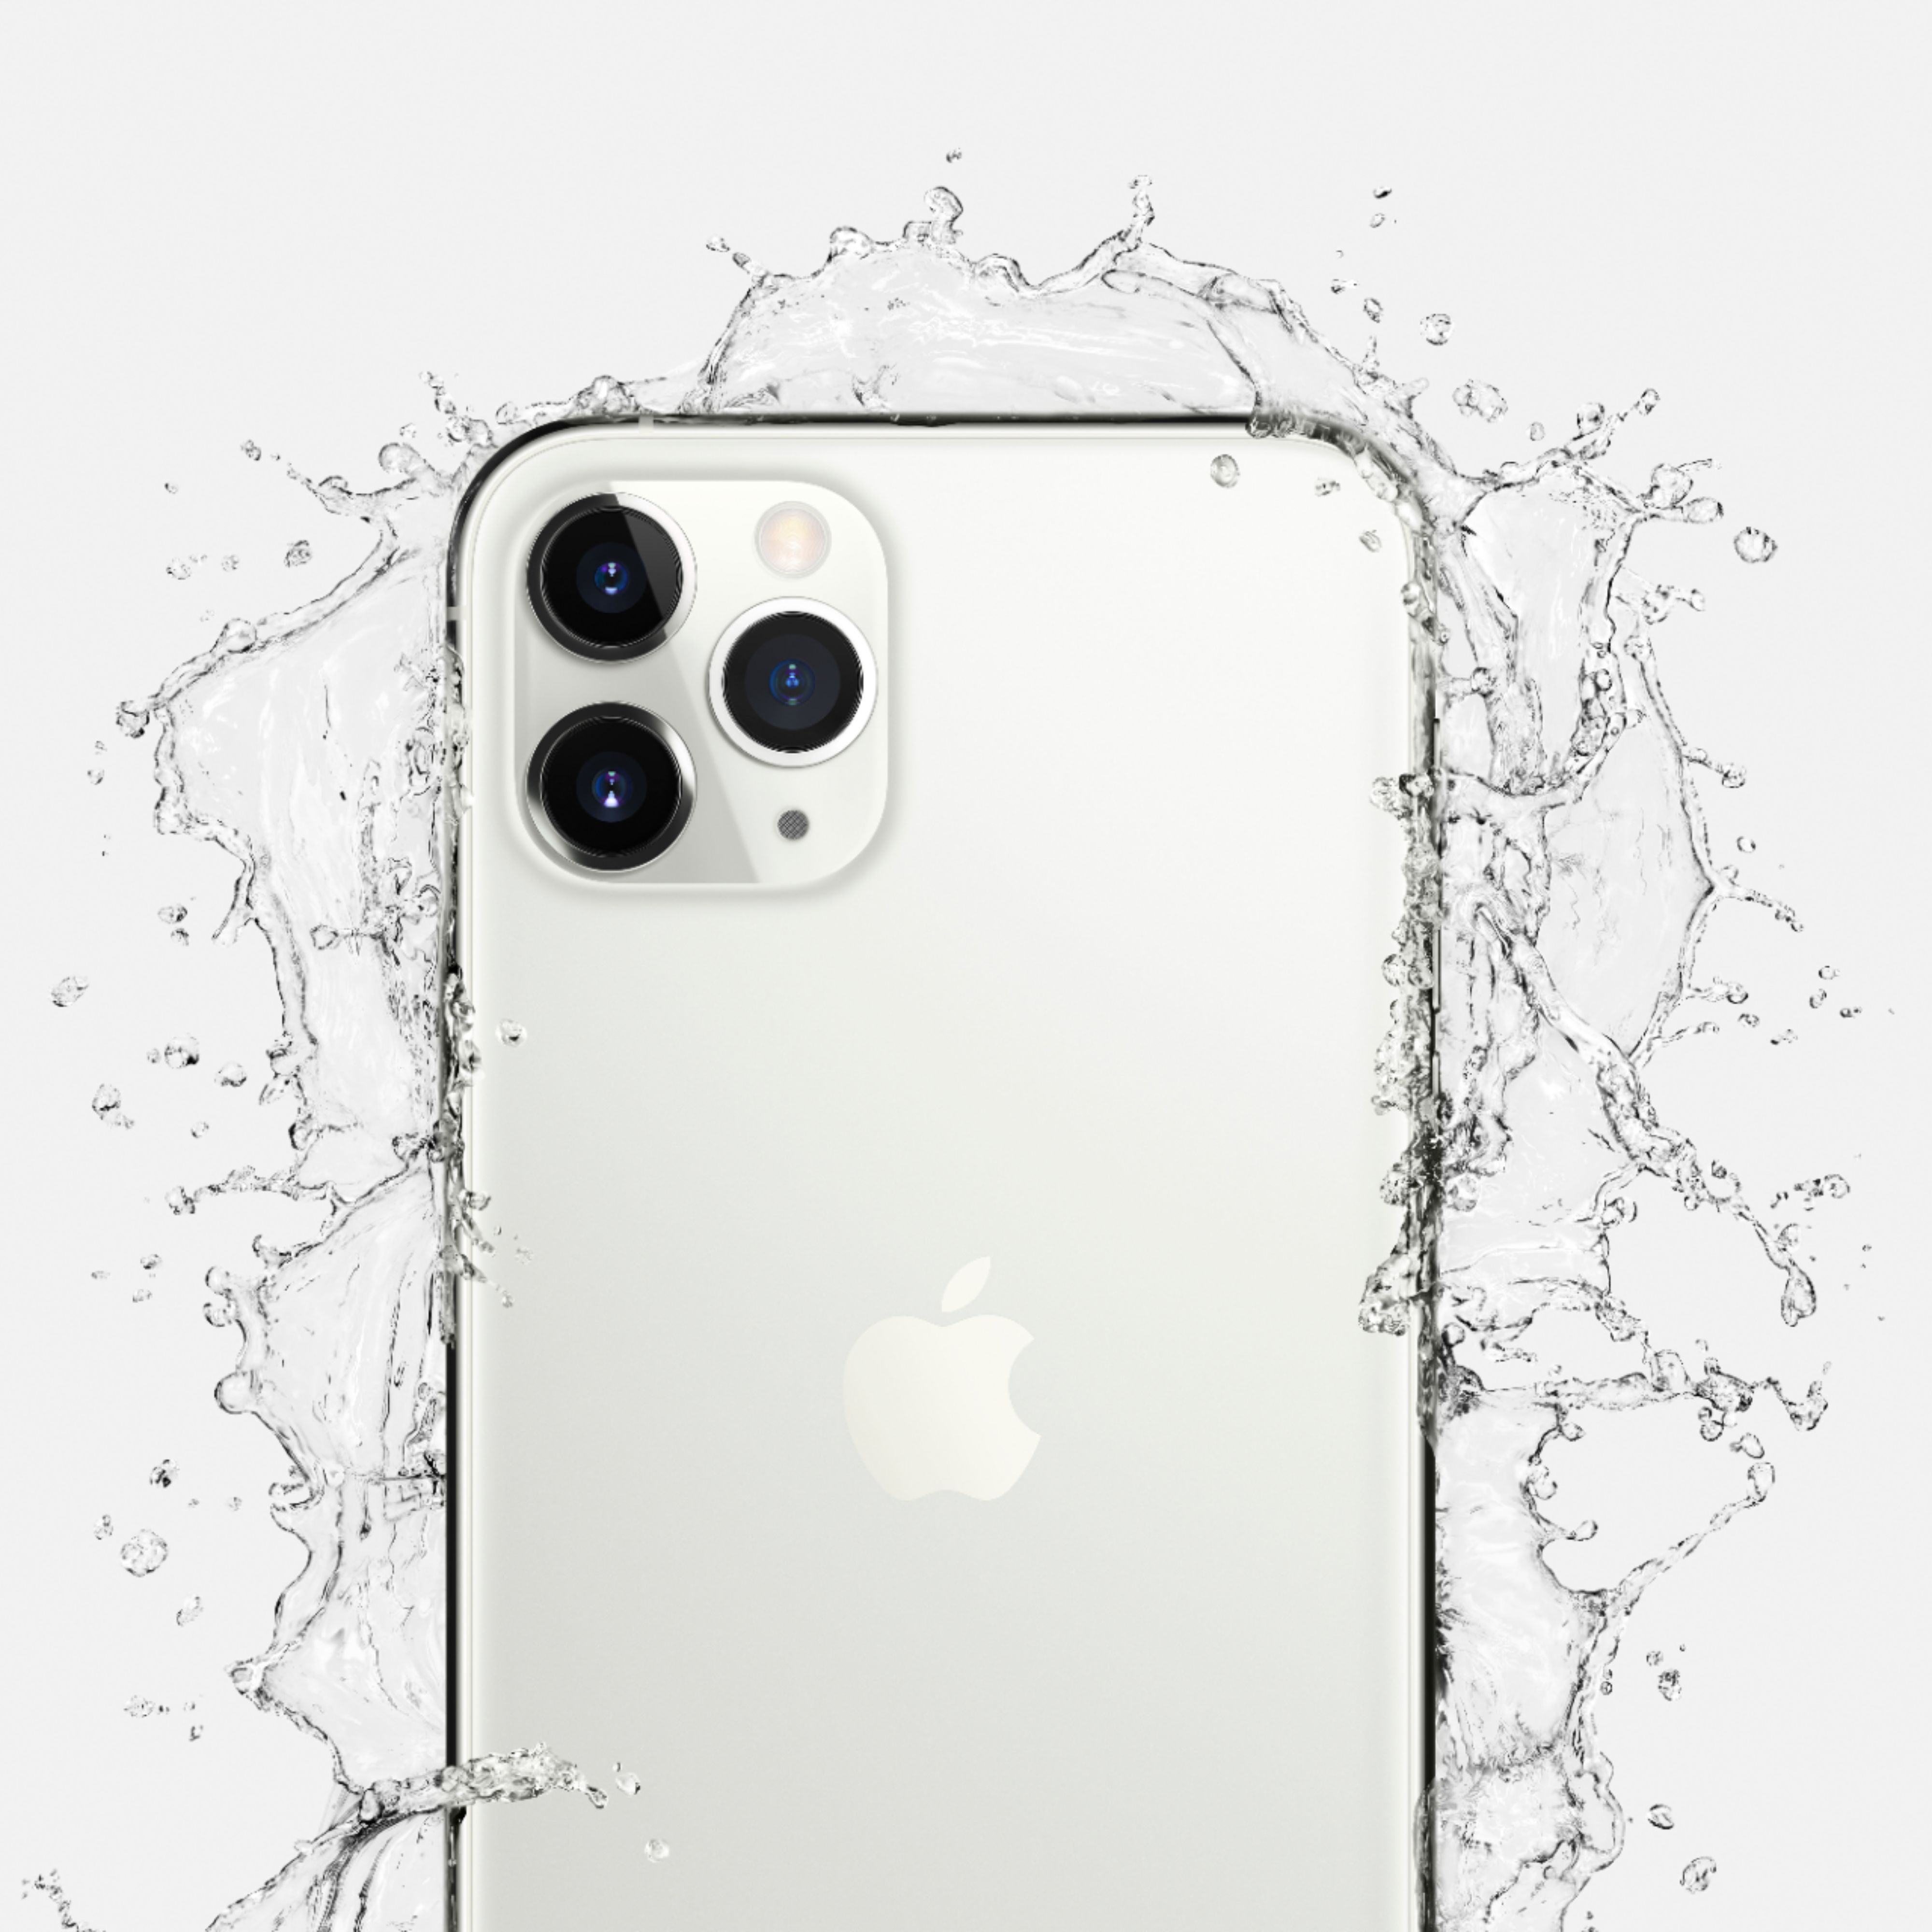 apple iphone 11 pro max 64gb smartphone - space gray - unlocked - certified refurbished best buy canada on iphone 11 pro max 64gb unlocked best buy